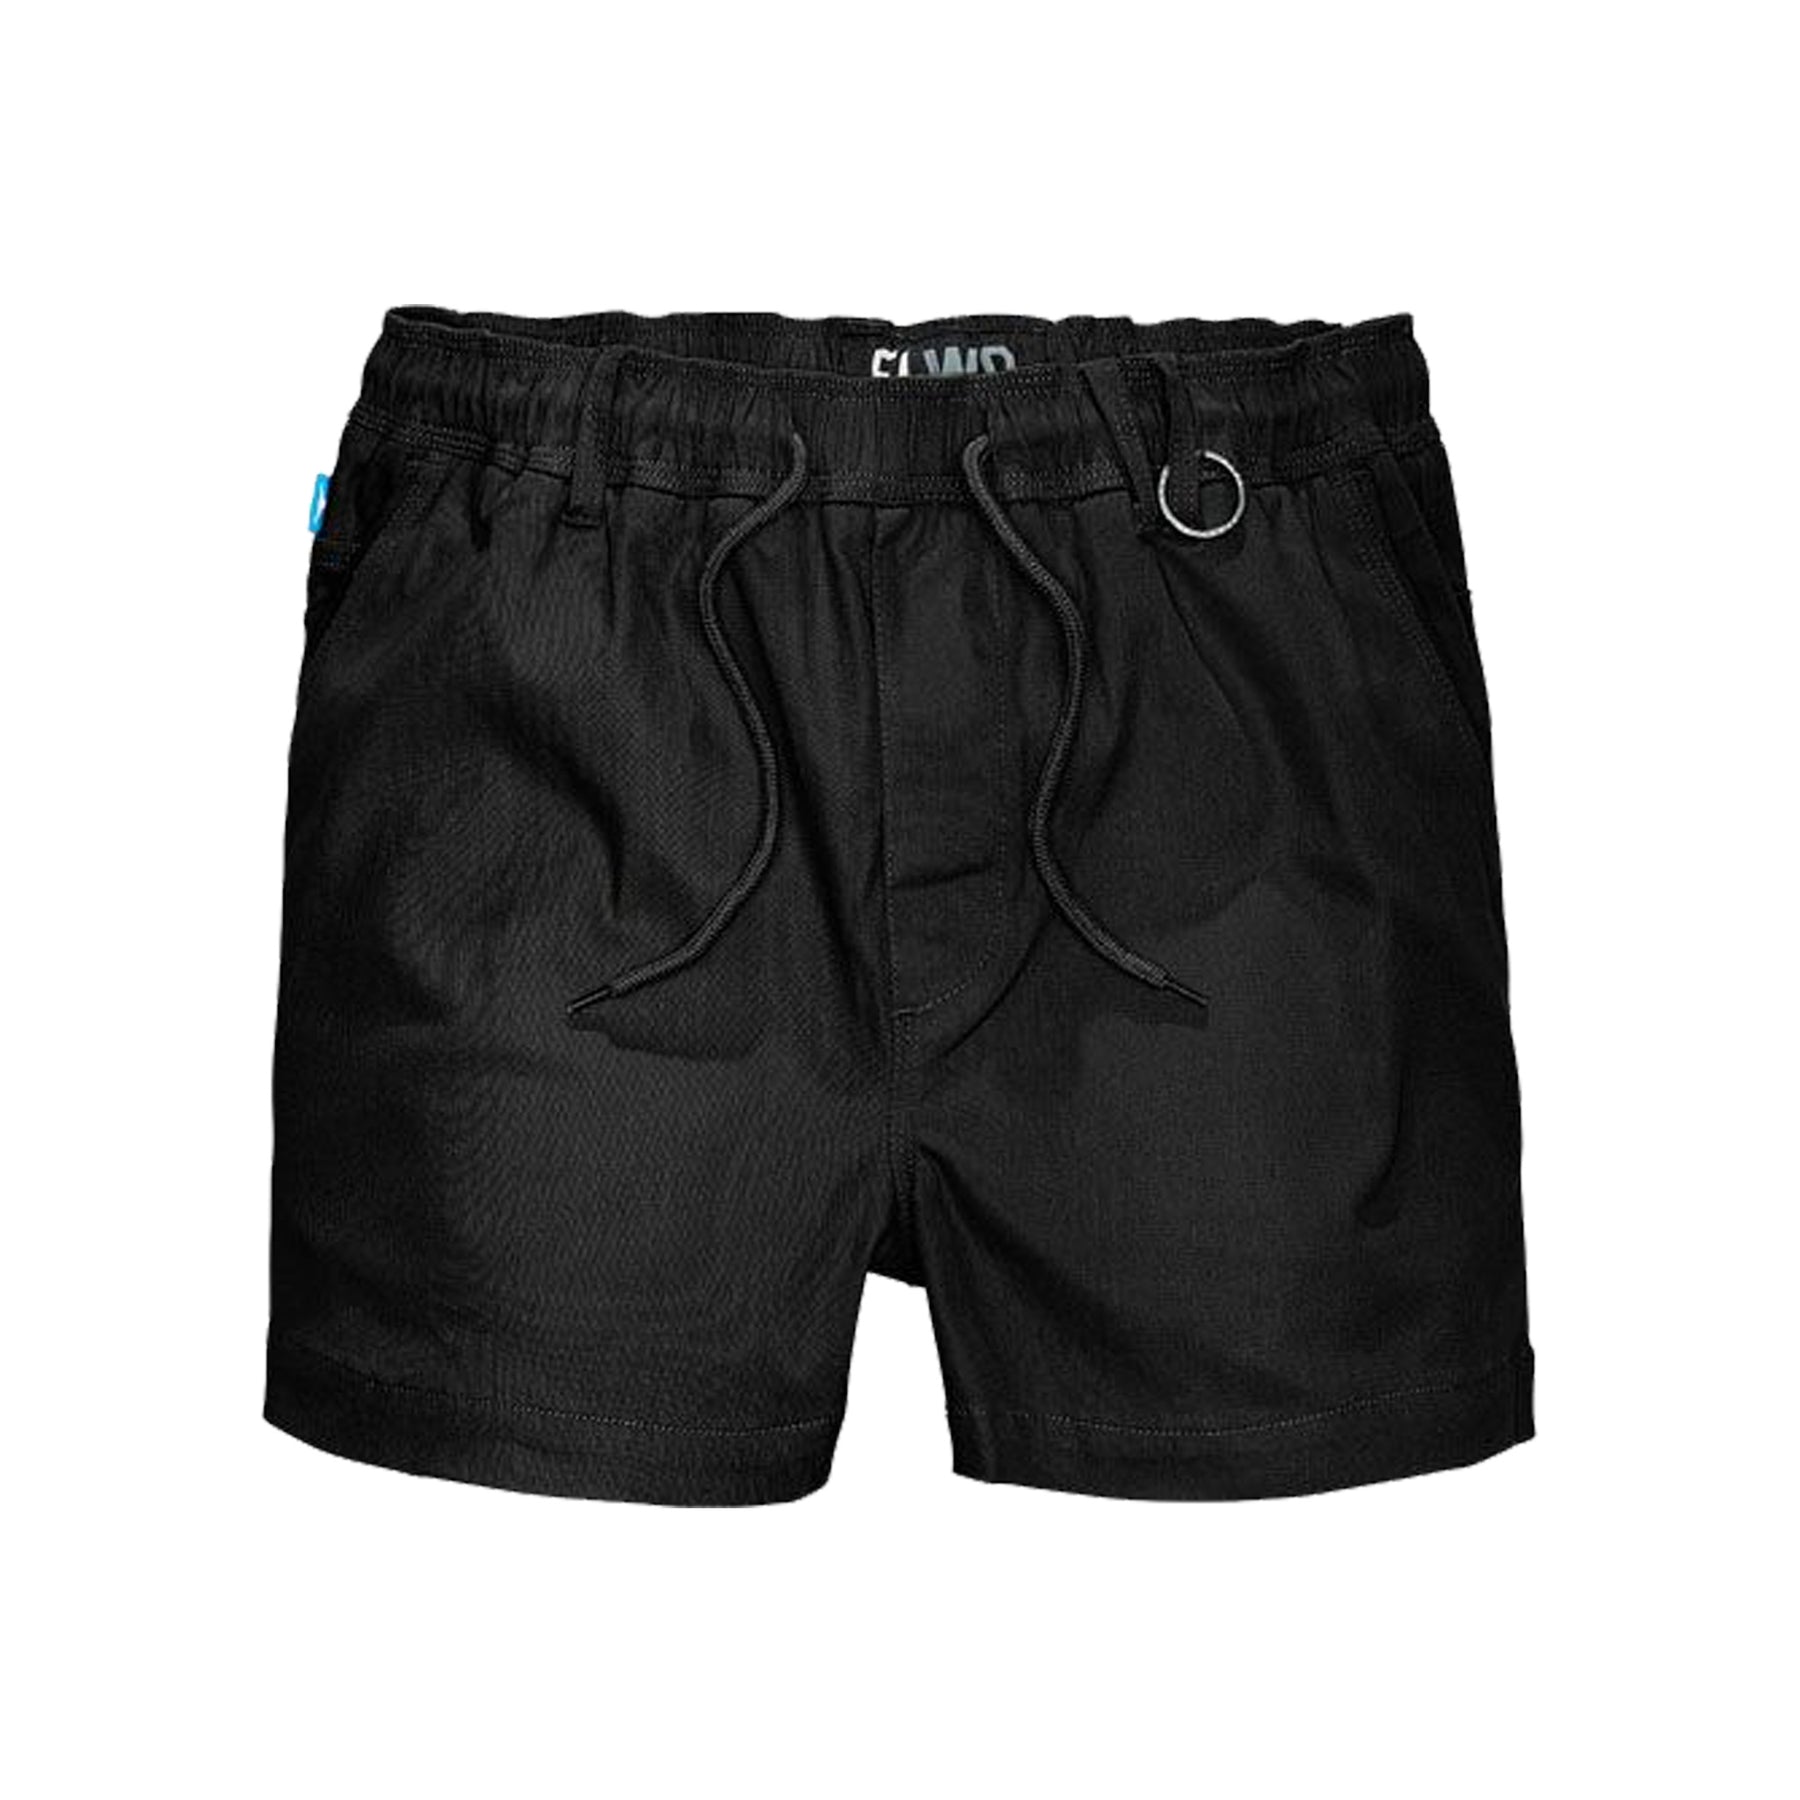 elwd elastic short shorts in black